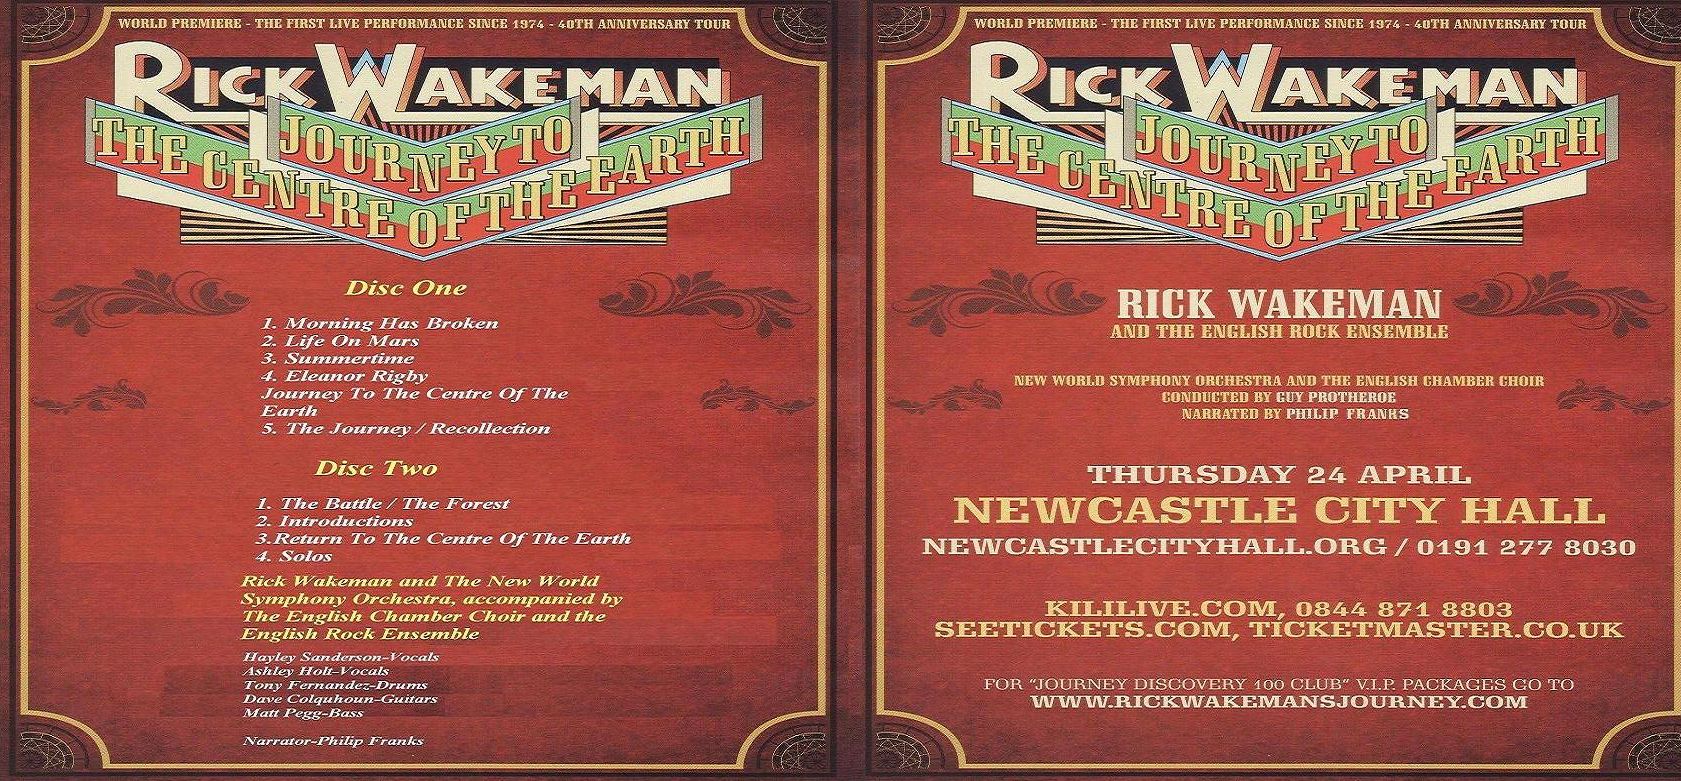 RickWakeman2014-04-24NewcastleCityHallUK (3).jpg